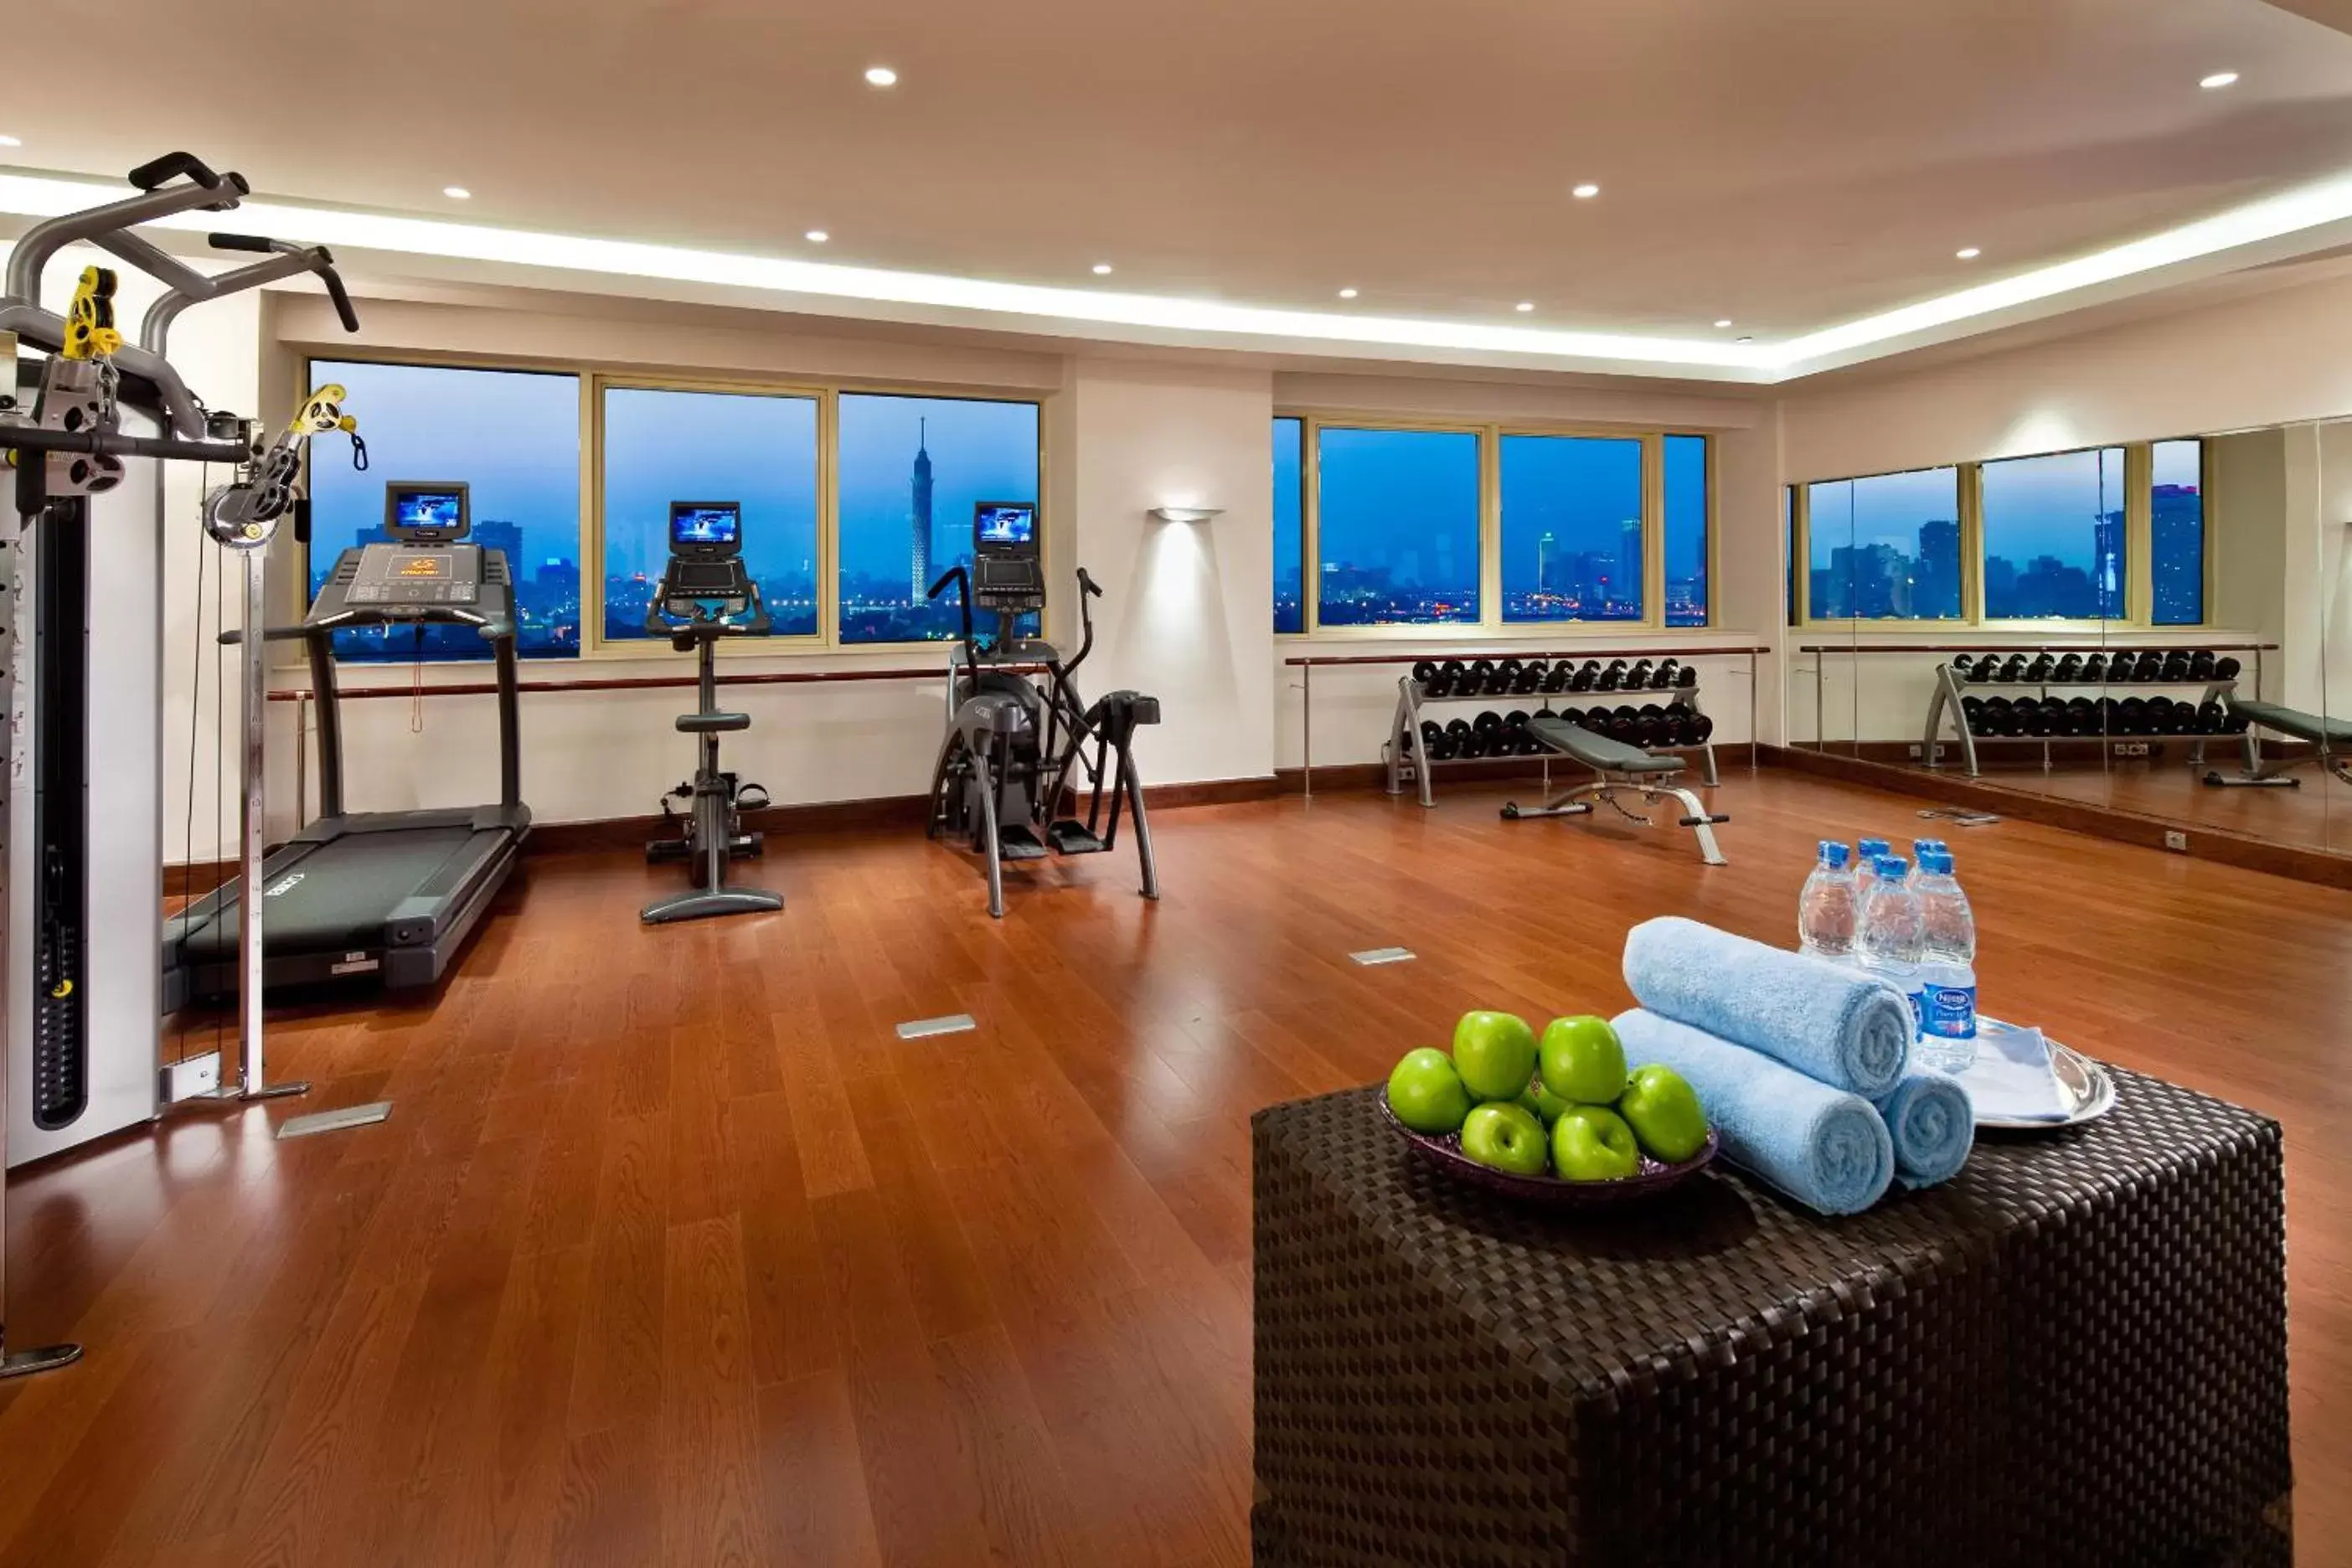 Fitness centre/facilities, Fitness Center/Facilities in Kempinski Nile Hotel, Cairo